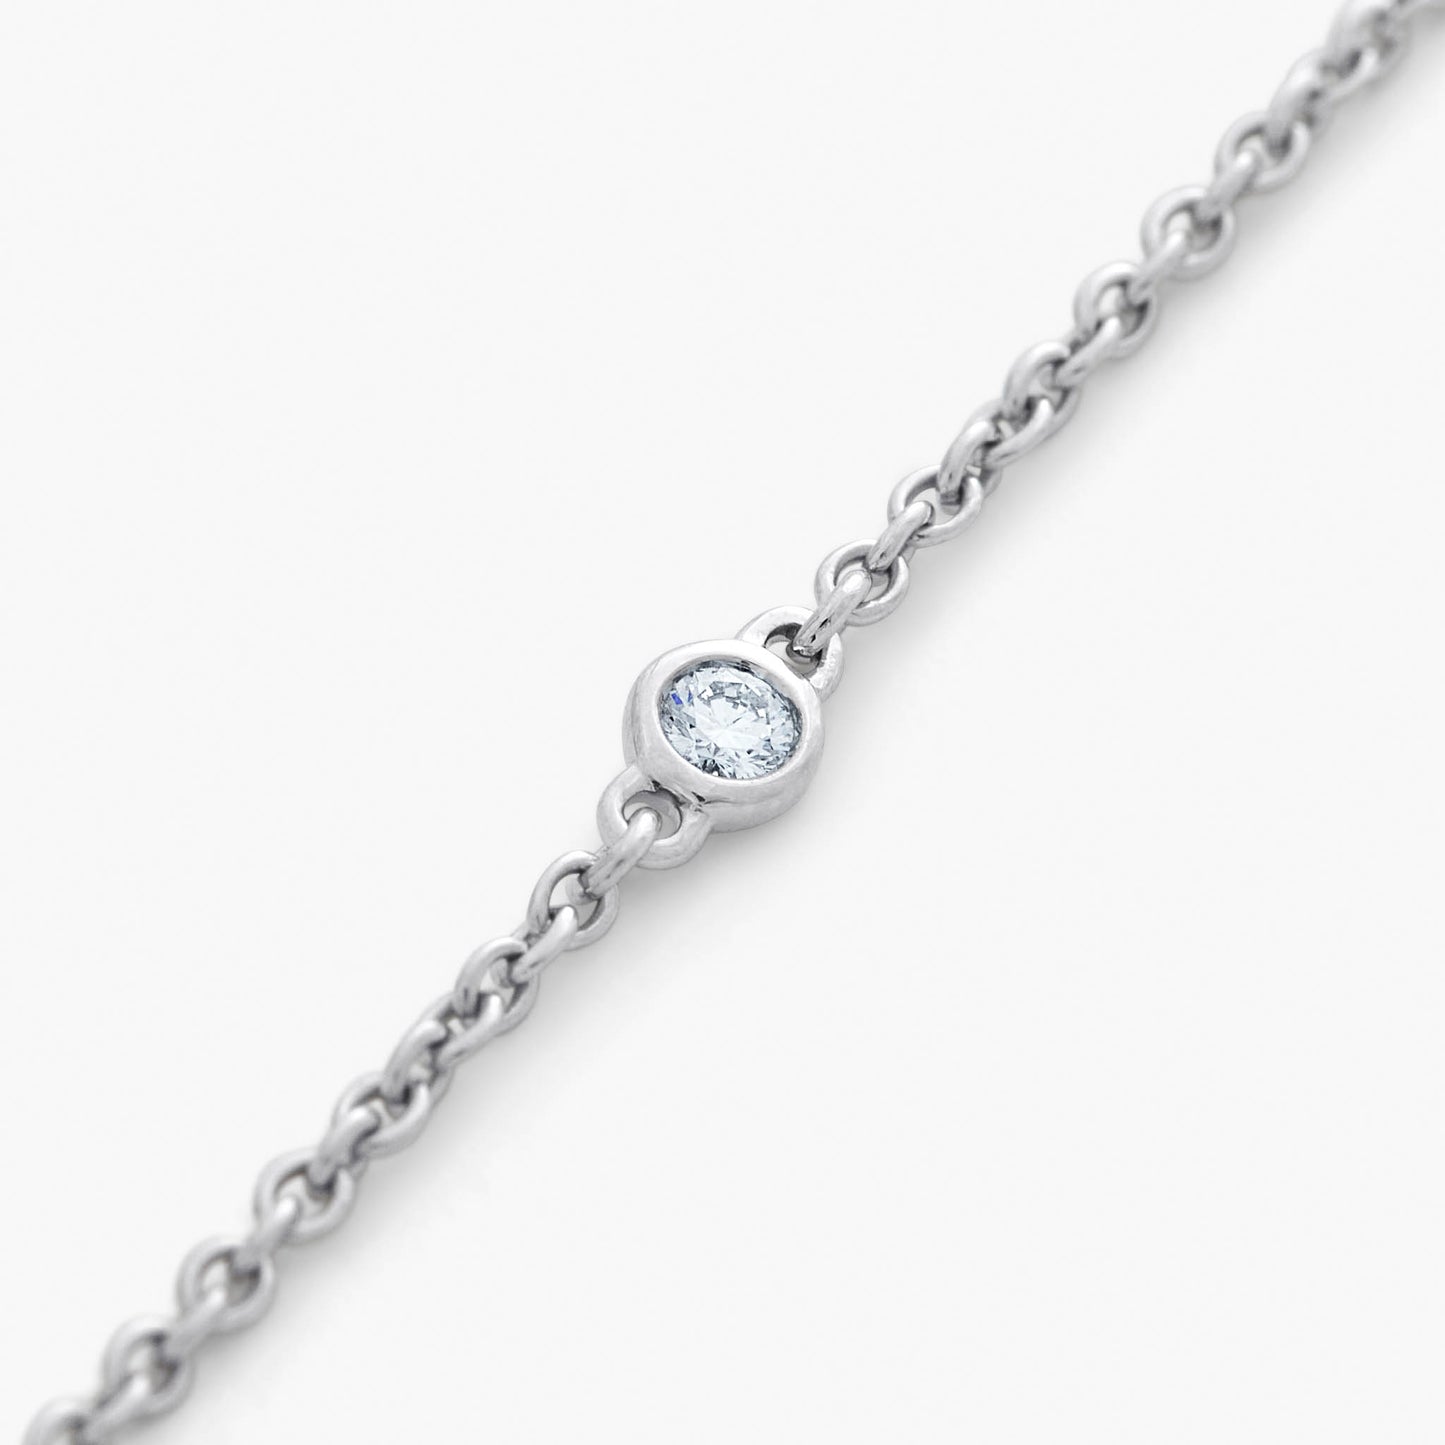 Guiding Star 18ct White Gold & Diamond Necklace, 70cm